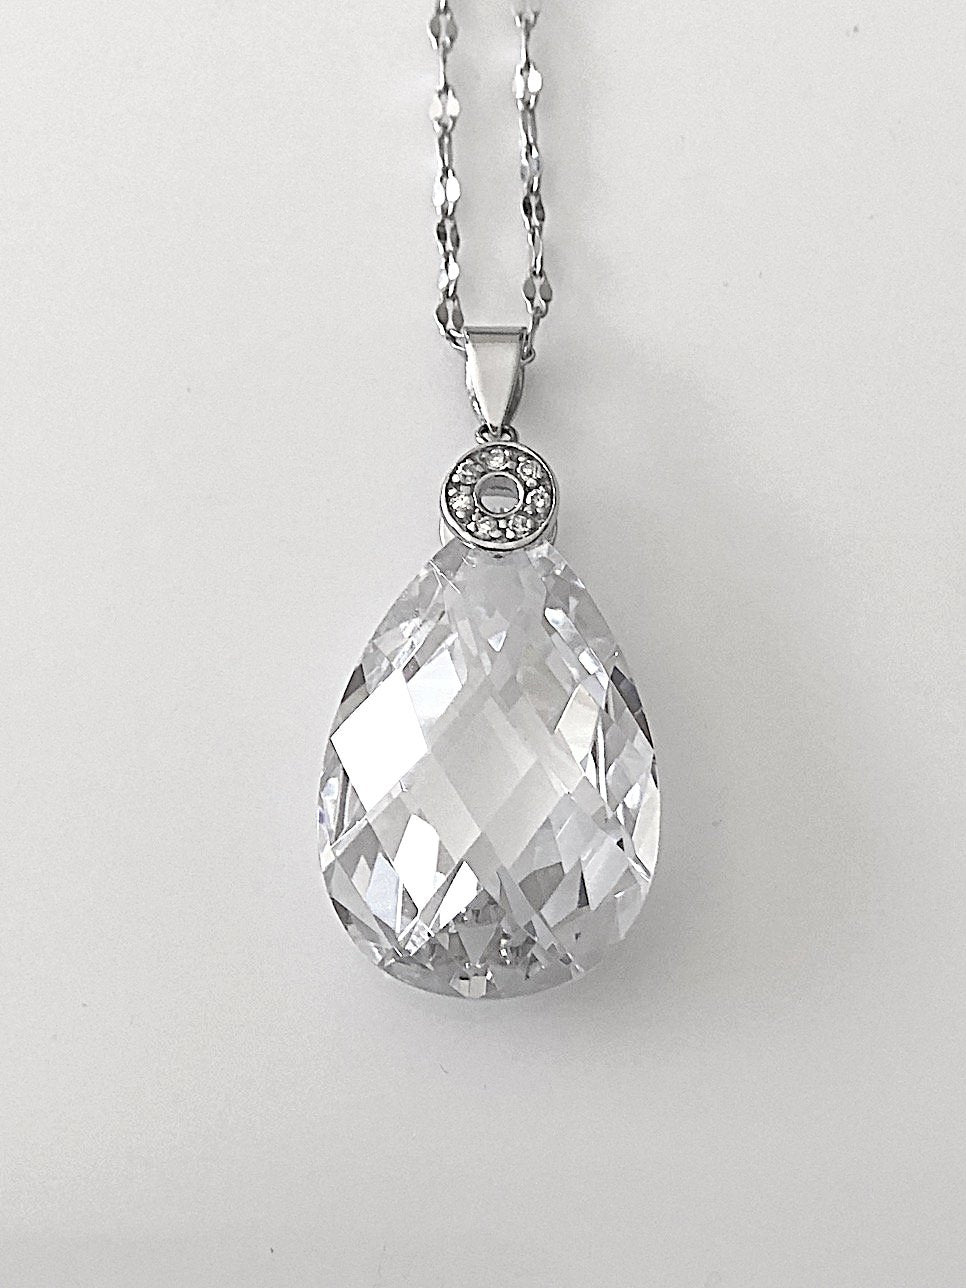 Faceted Teardrop Crystal Pendant in Sterling Silver